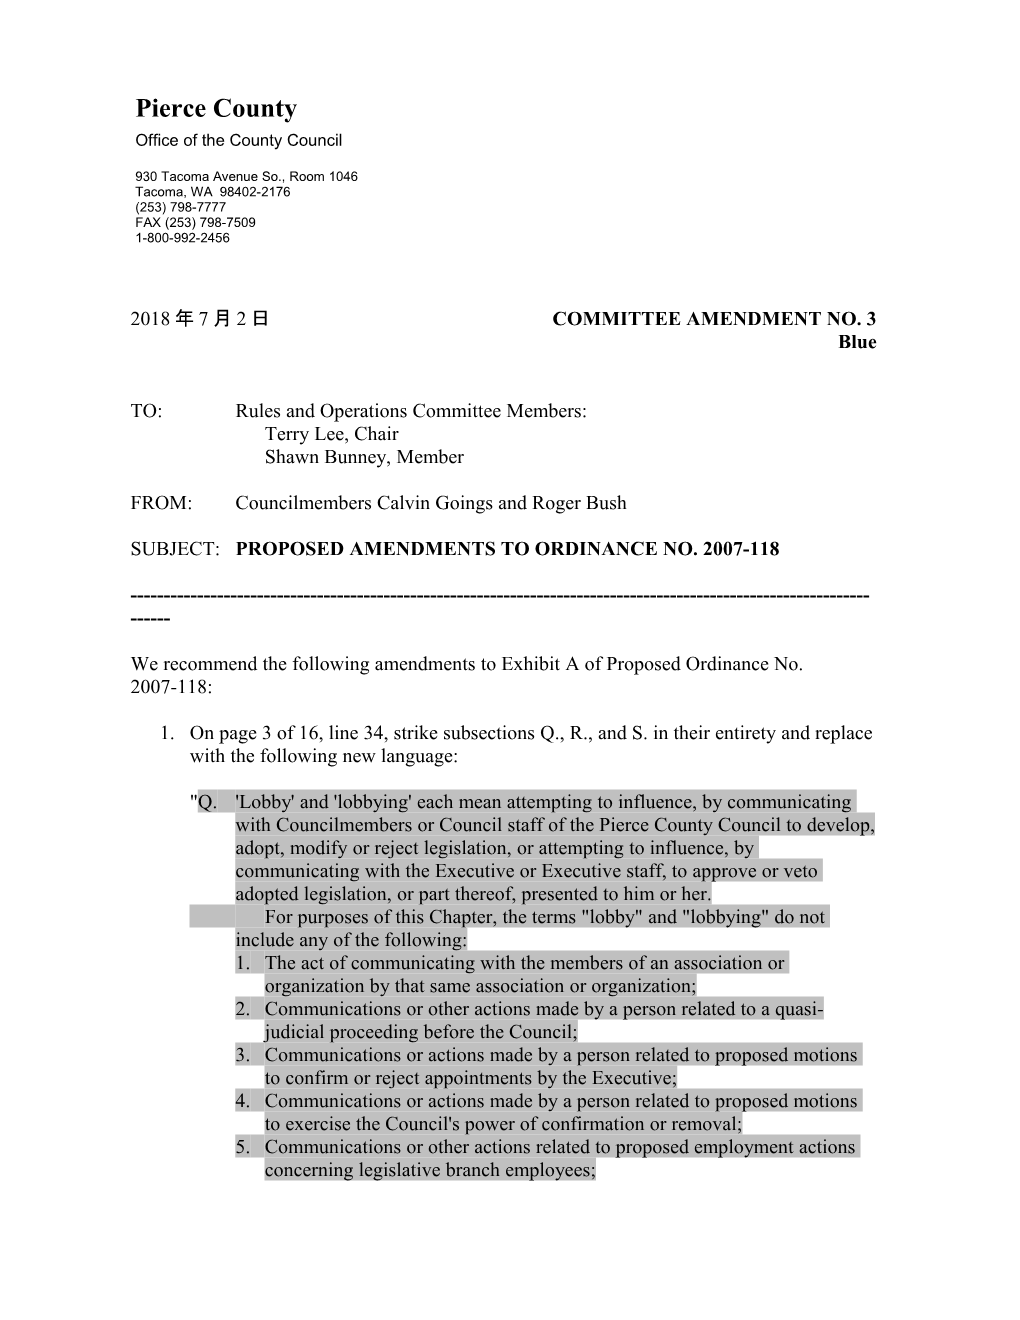 Council Amendment No. 1 to Proposed Emergency Ordinance No. 2007-109S